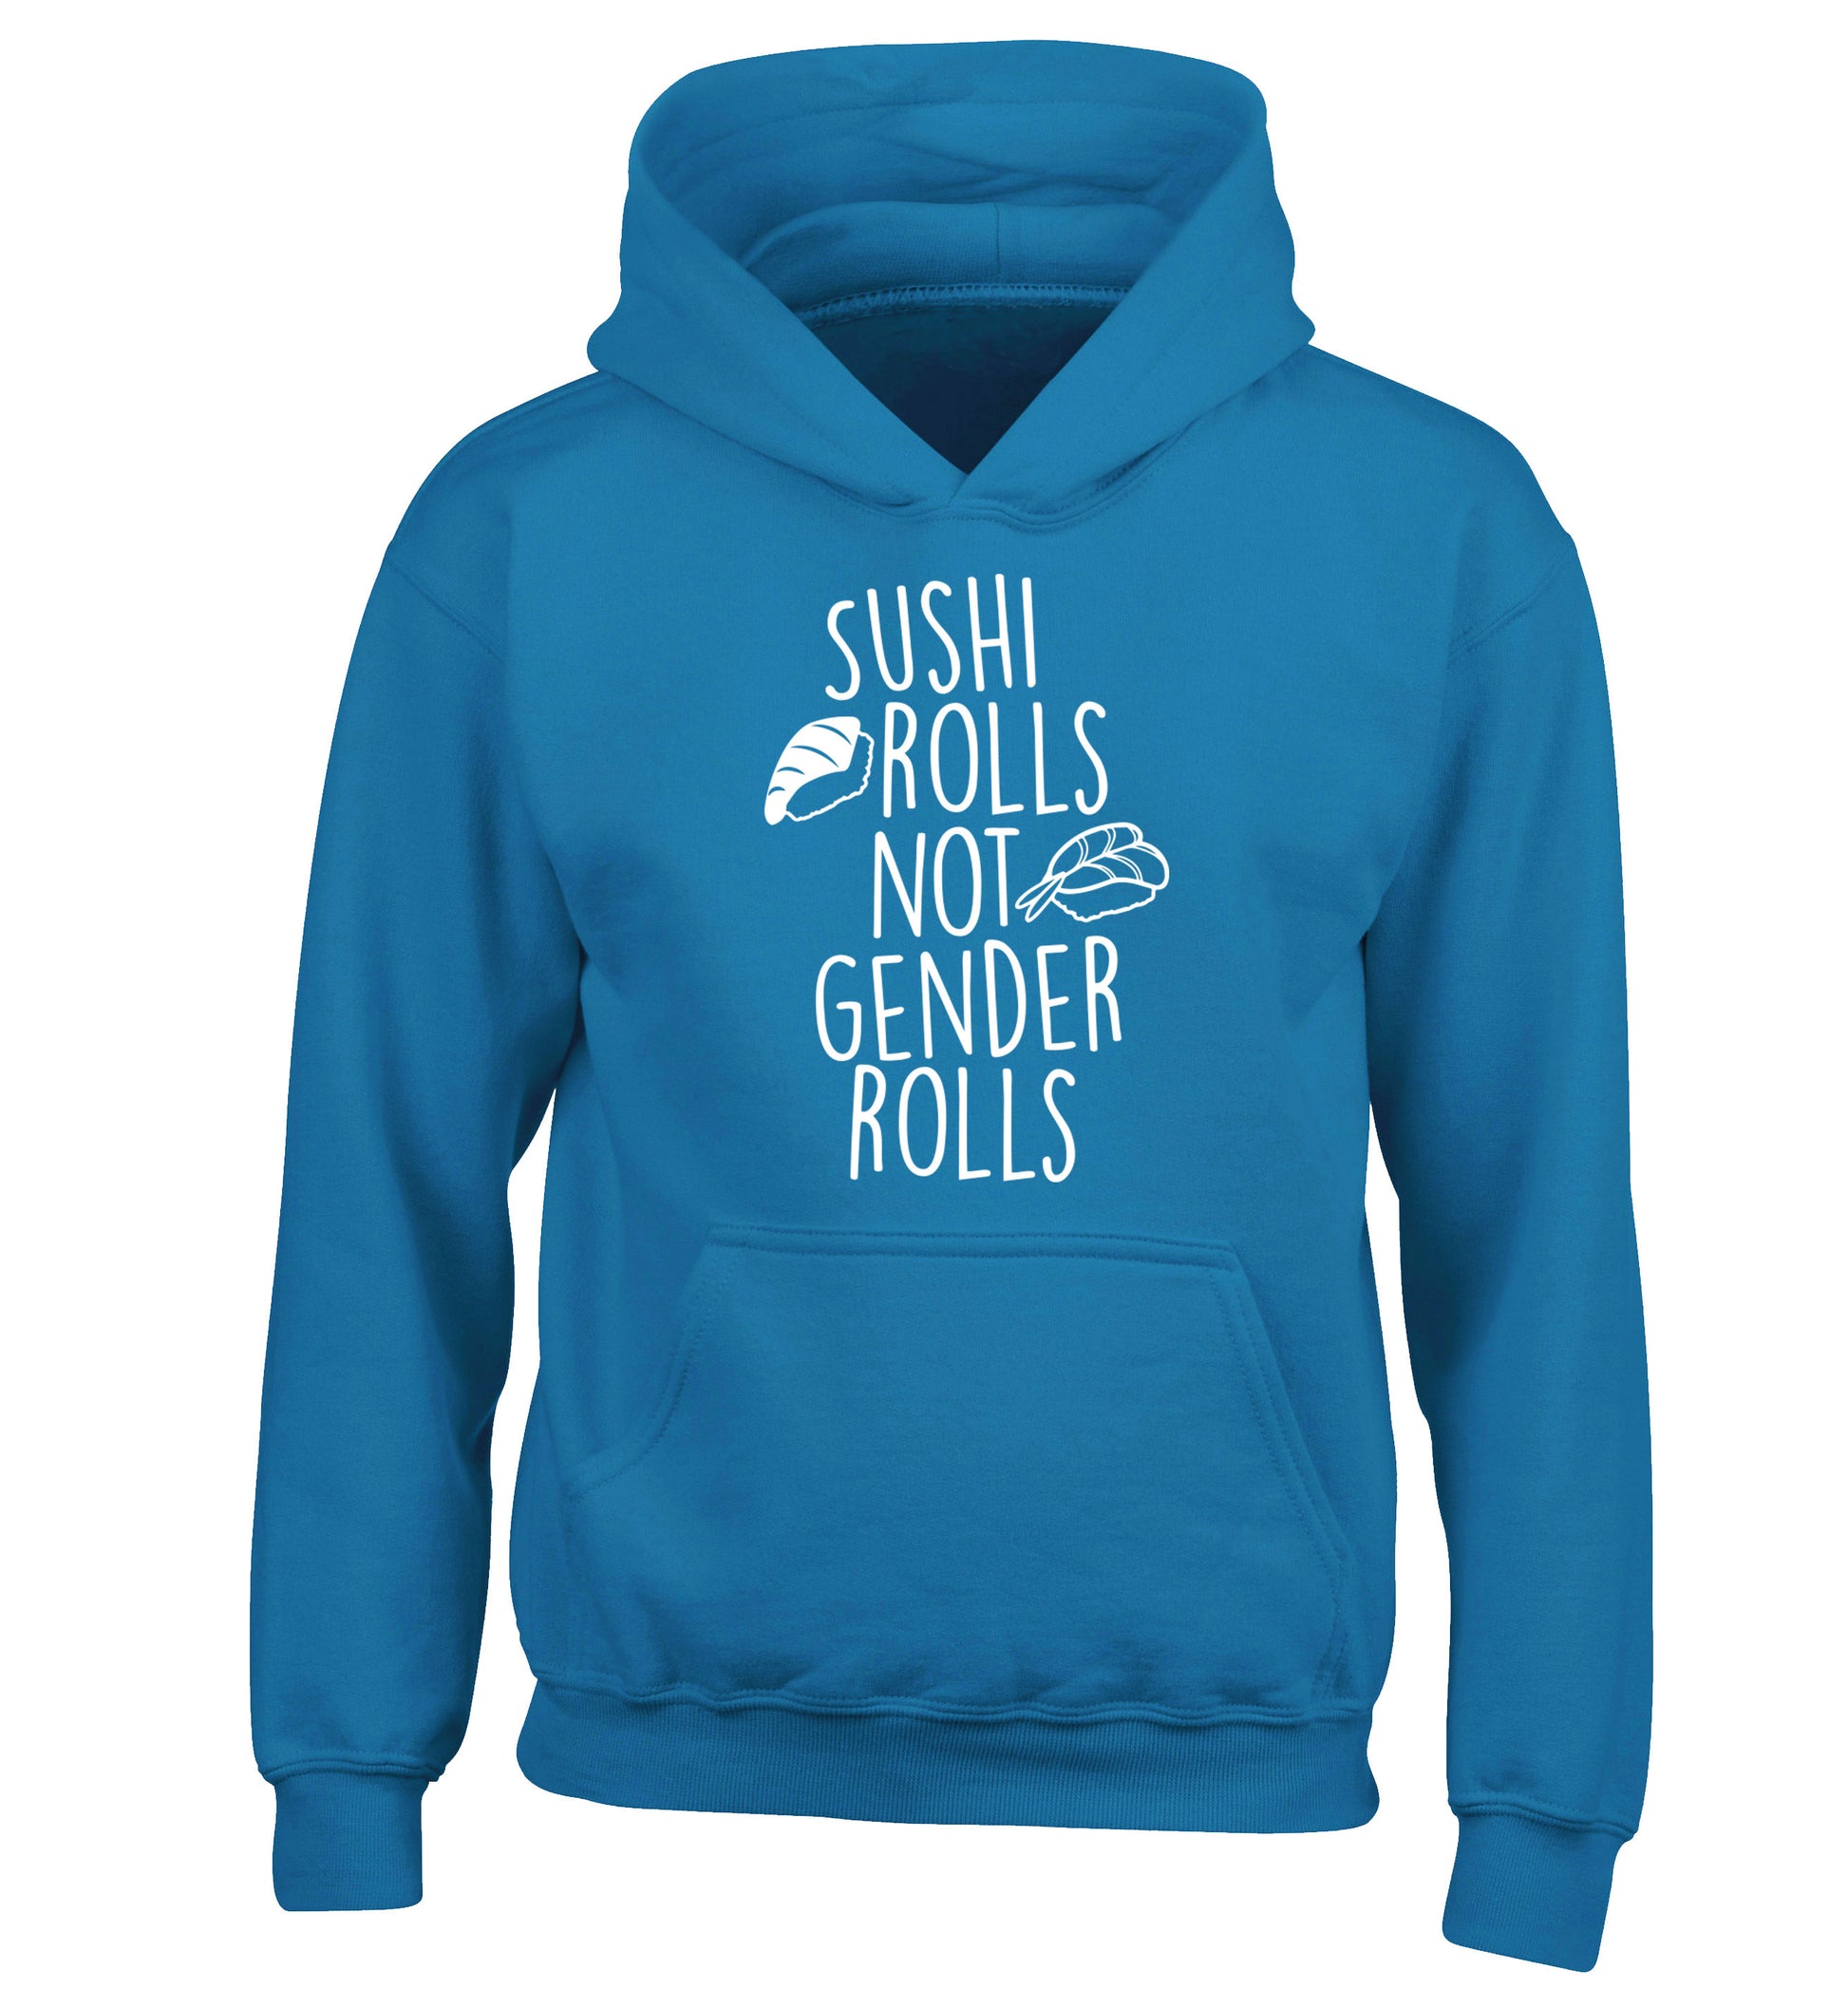 Sushi rolls not gender rolls children's blue hoodie 12-14 Years